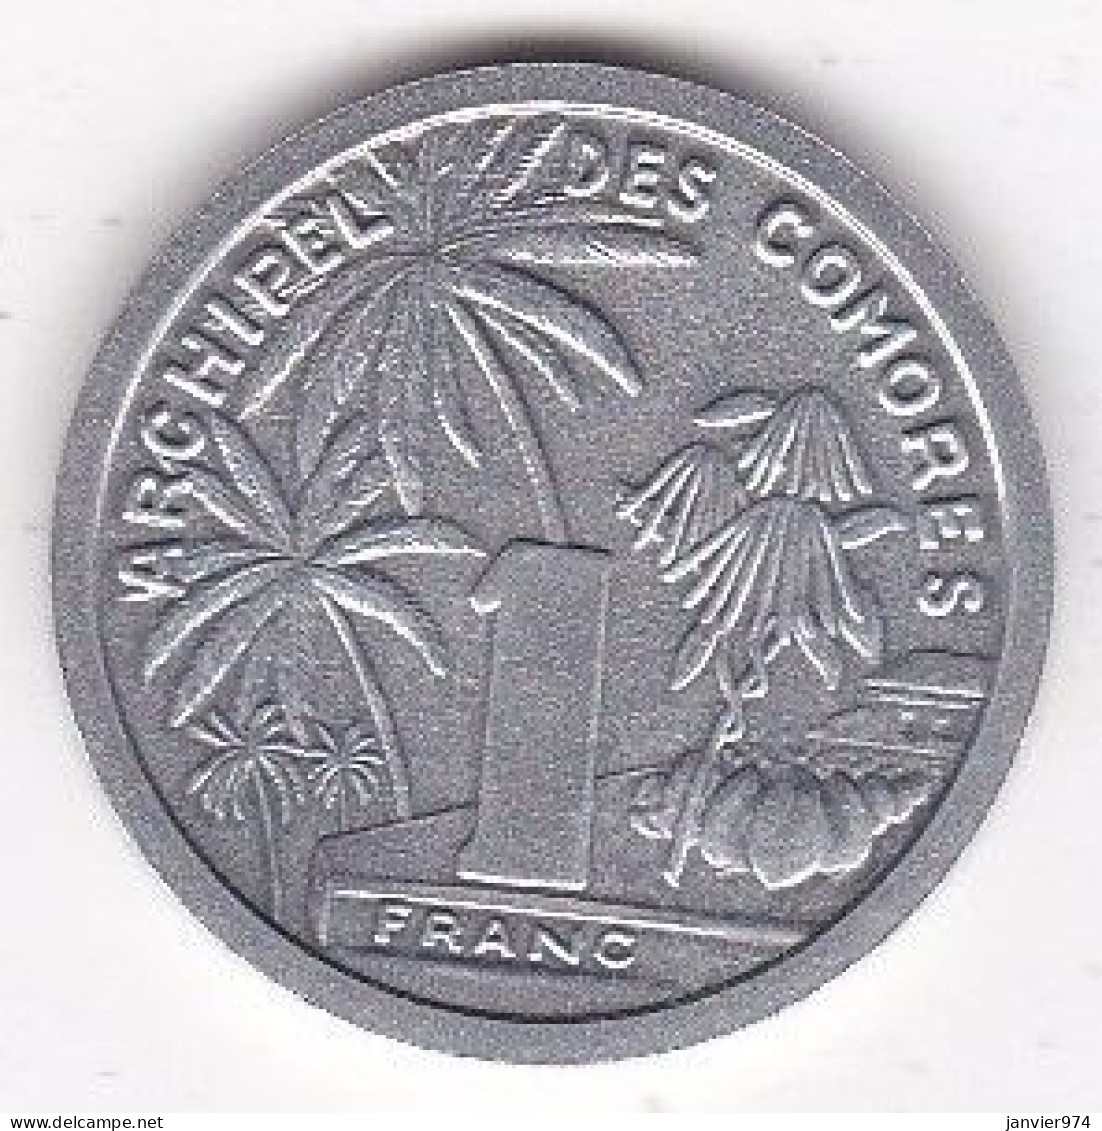 Archipel Des Comores , Republique Française 1 Franc 1964 ESSAI , En Aluminium LEC# 32, UNC - Comore